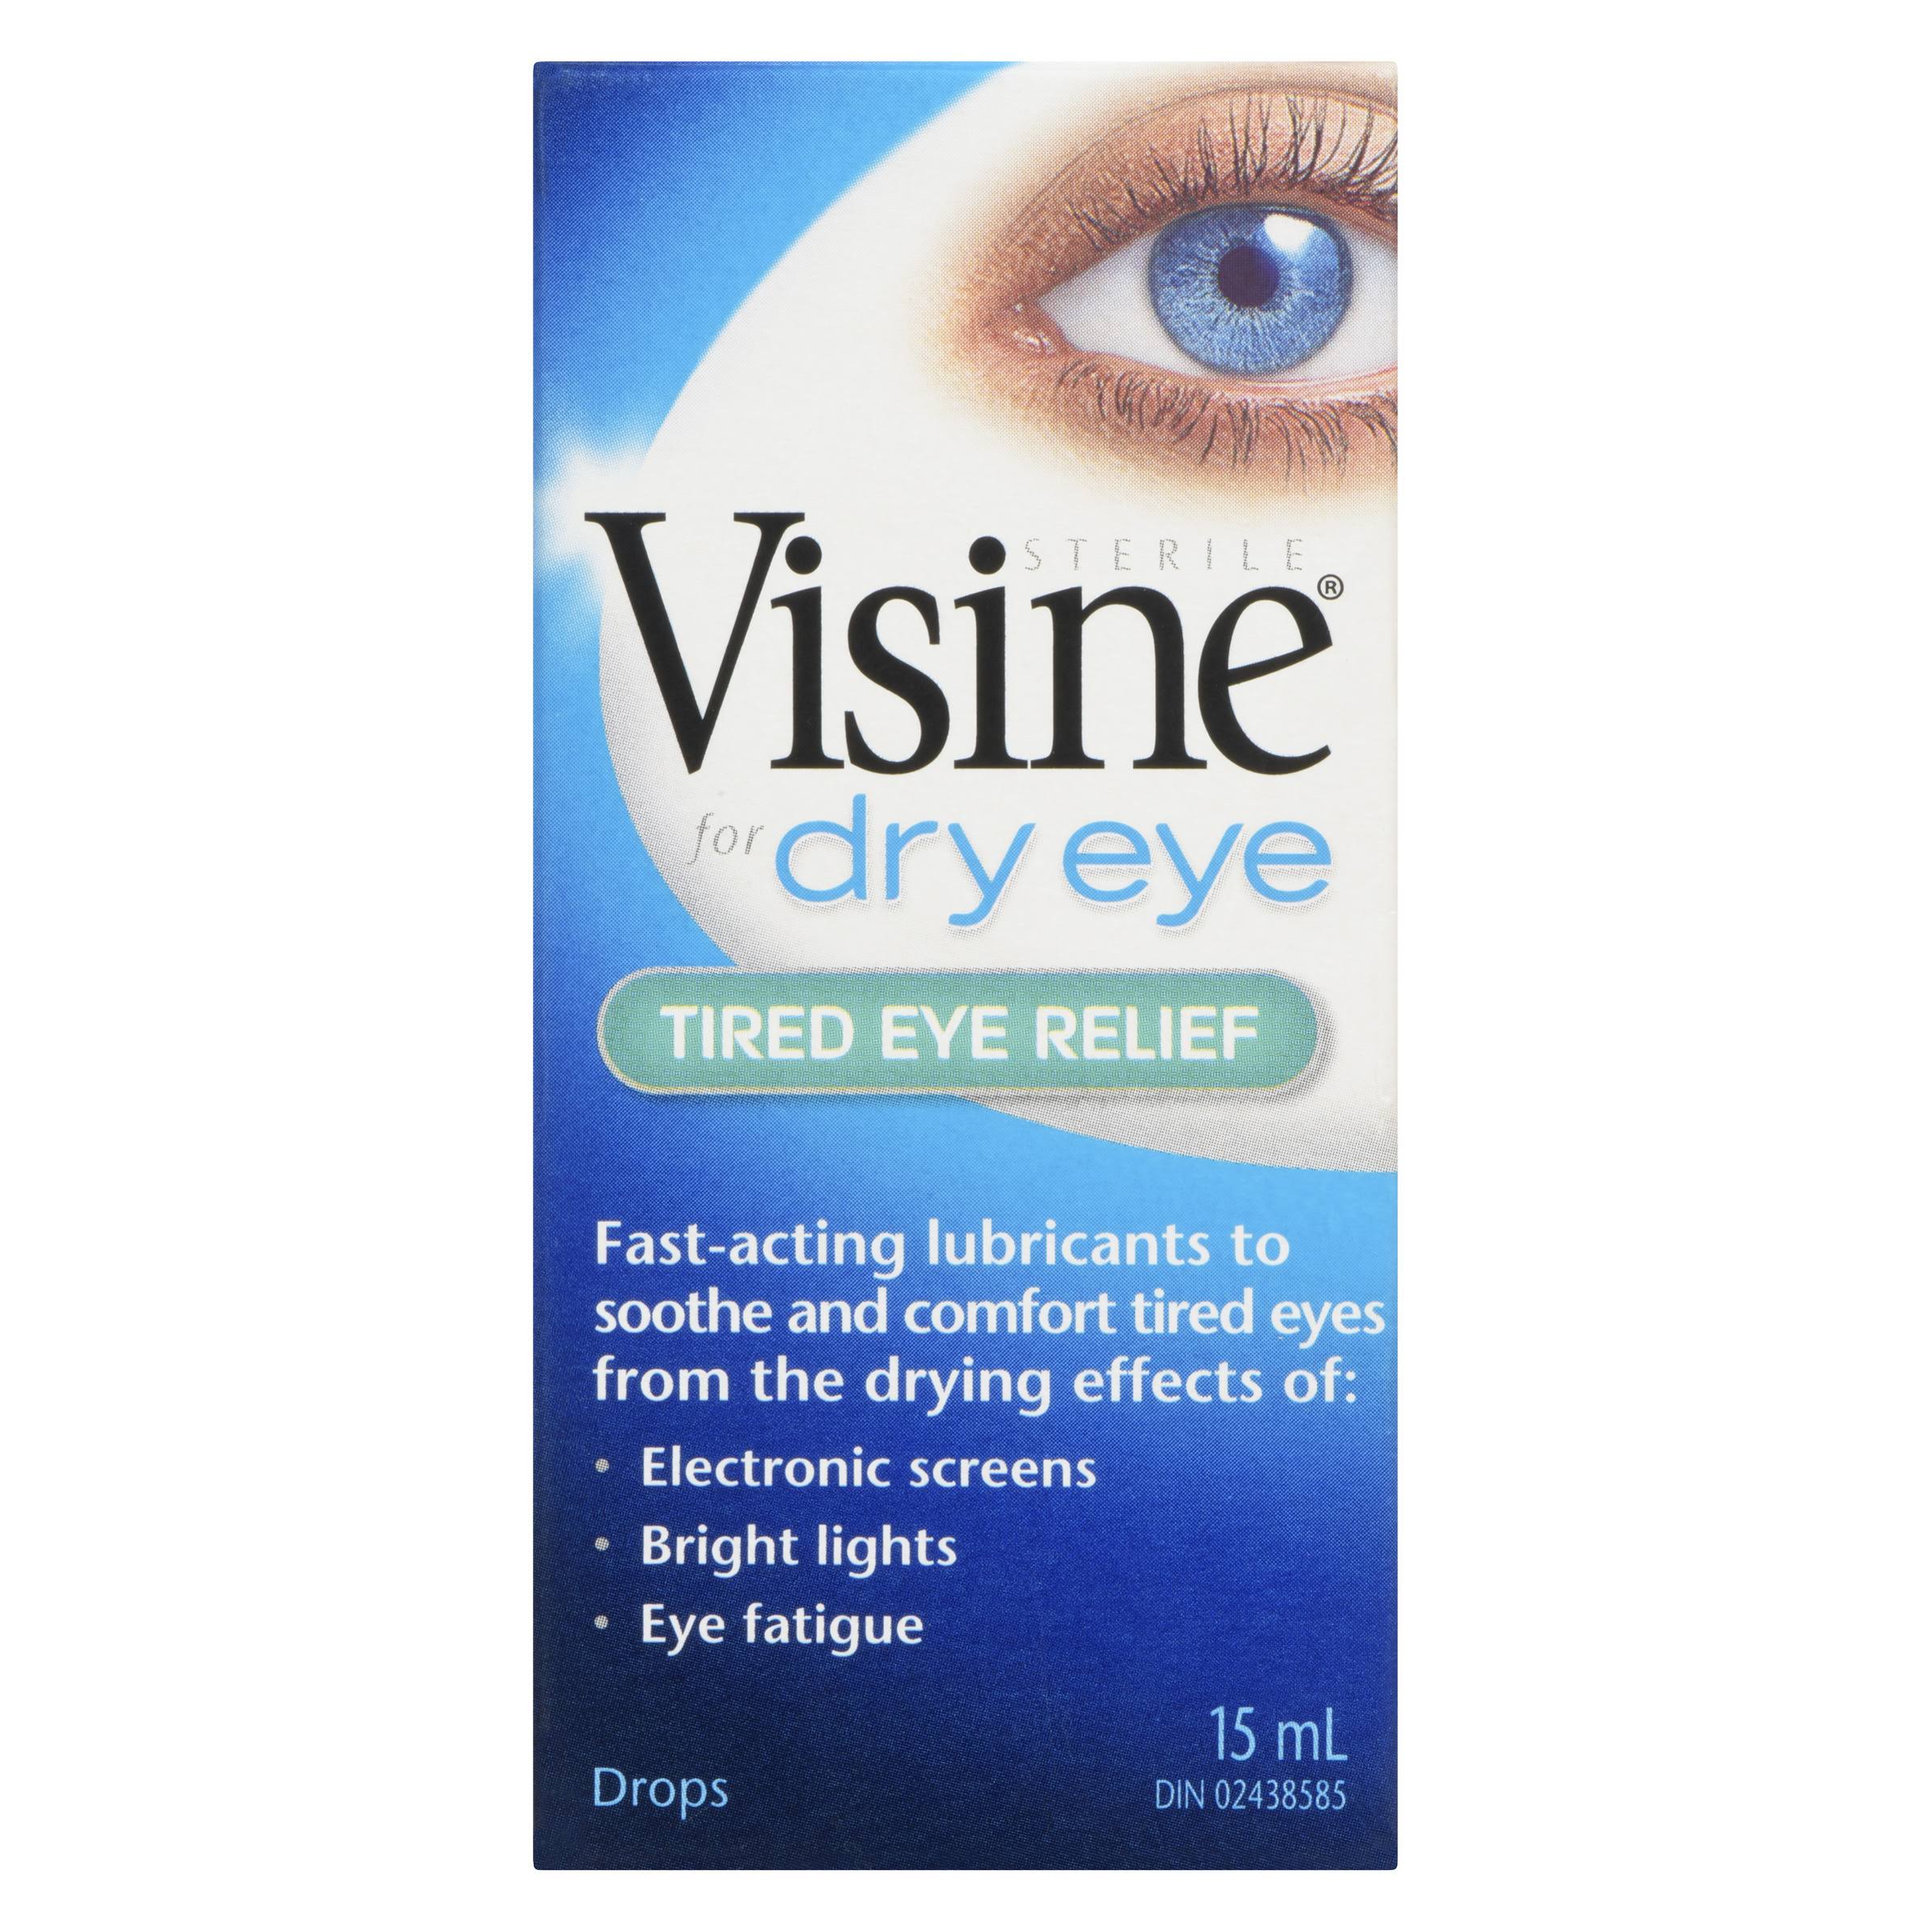 Visine Dry Eye Tired Eye Relief Eye Drops - 15ml